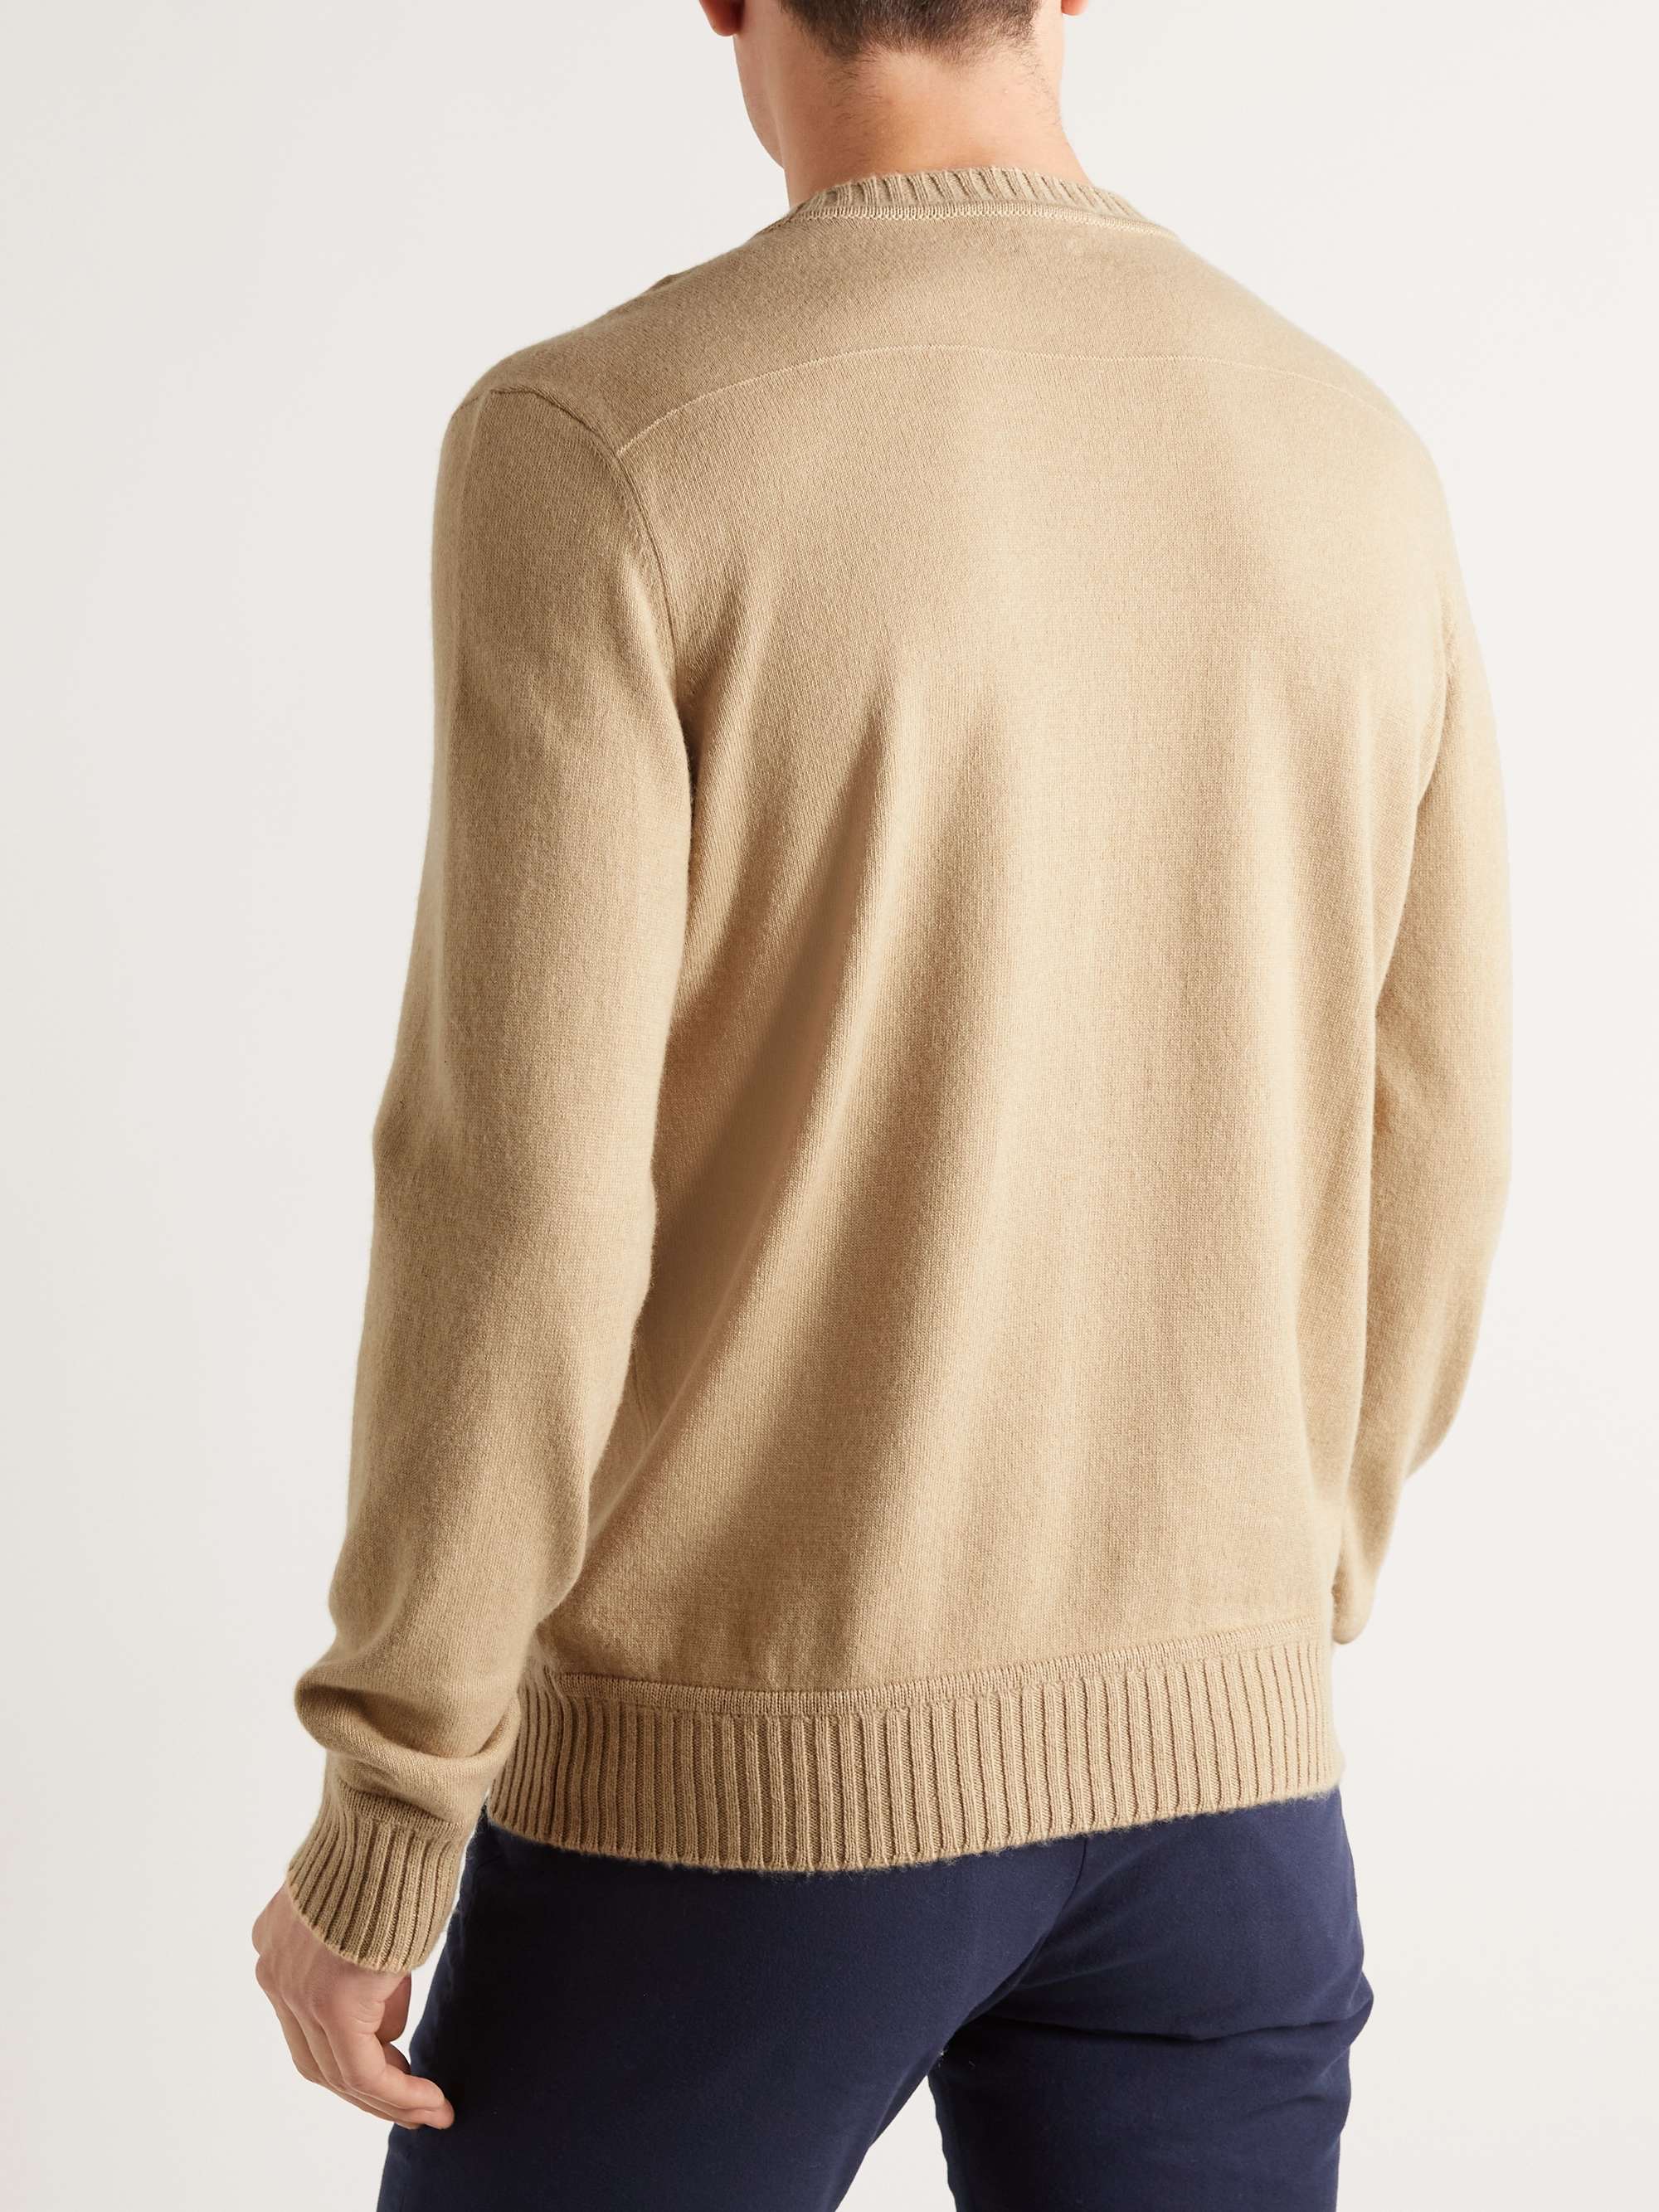 ERMENEGILDO ZEGNA Cotton and Cashmere-Blend Sweater